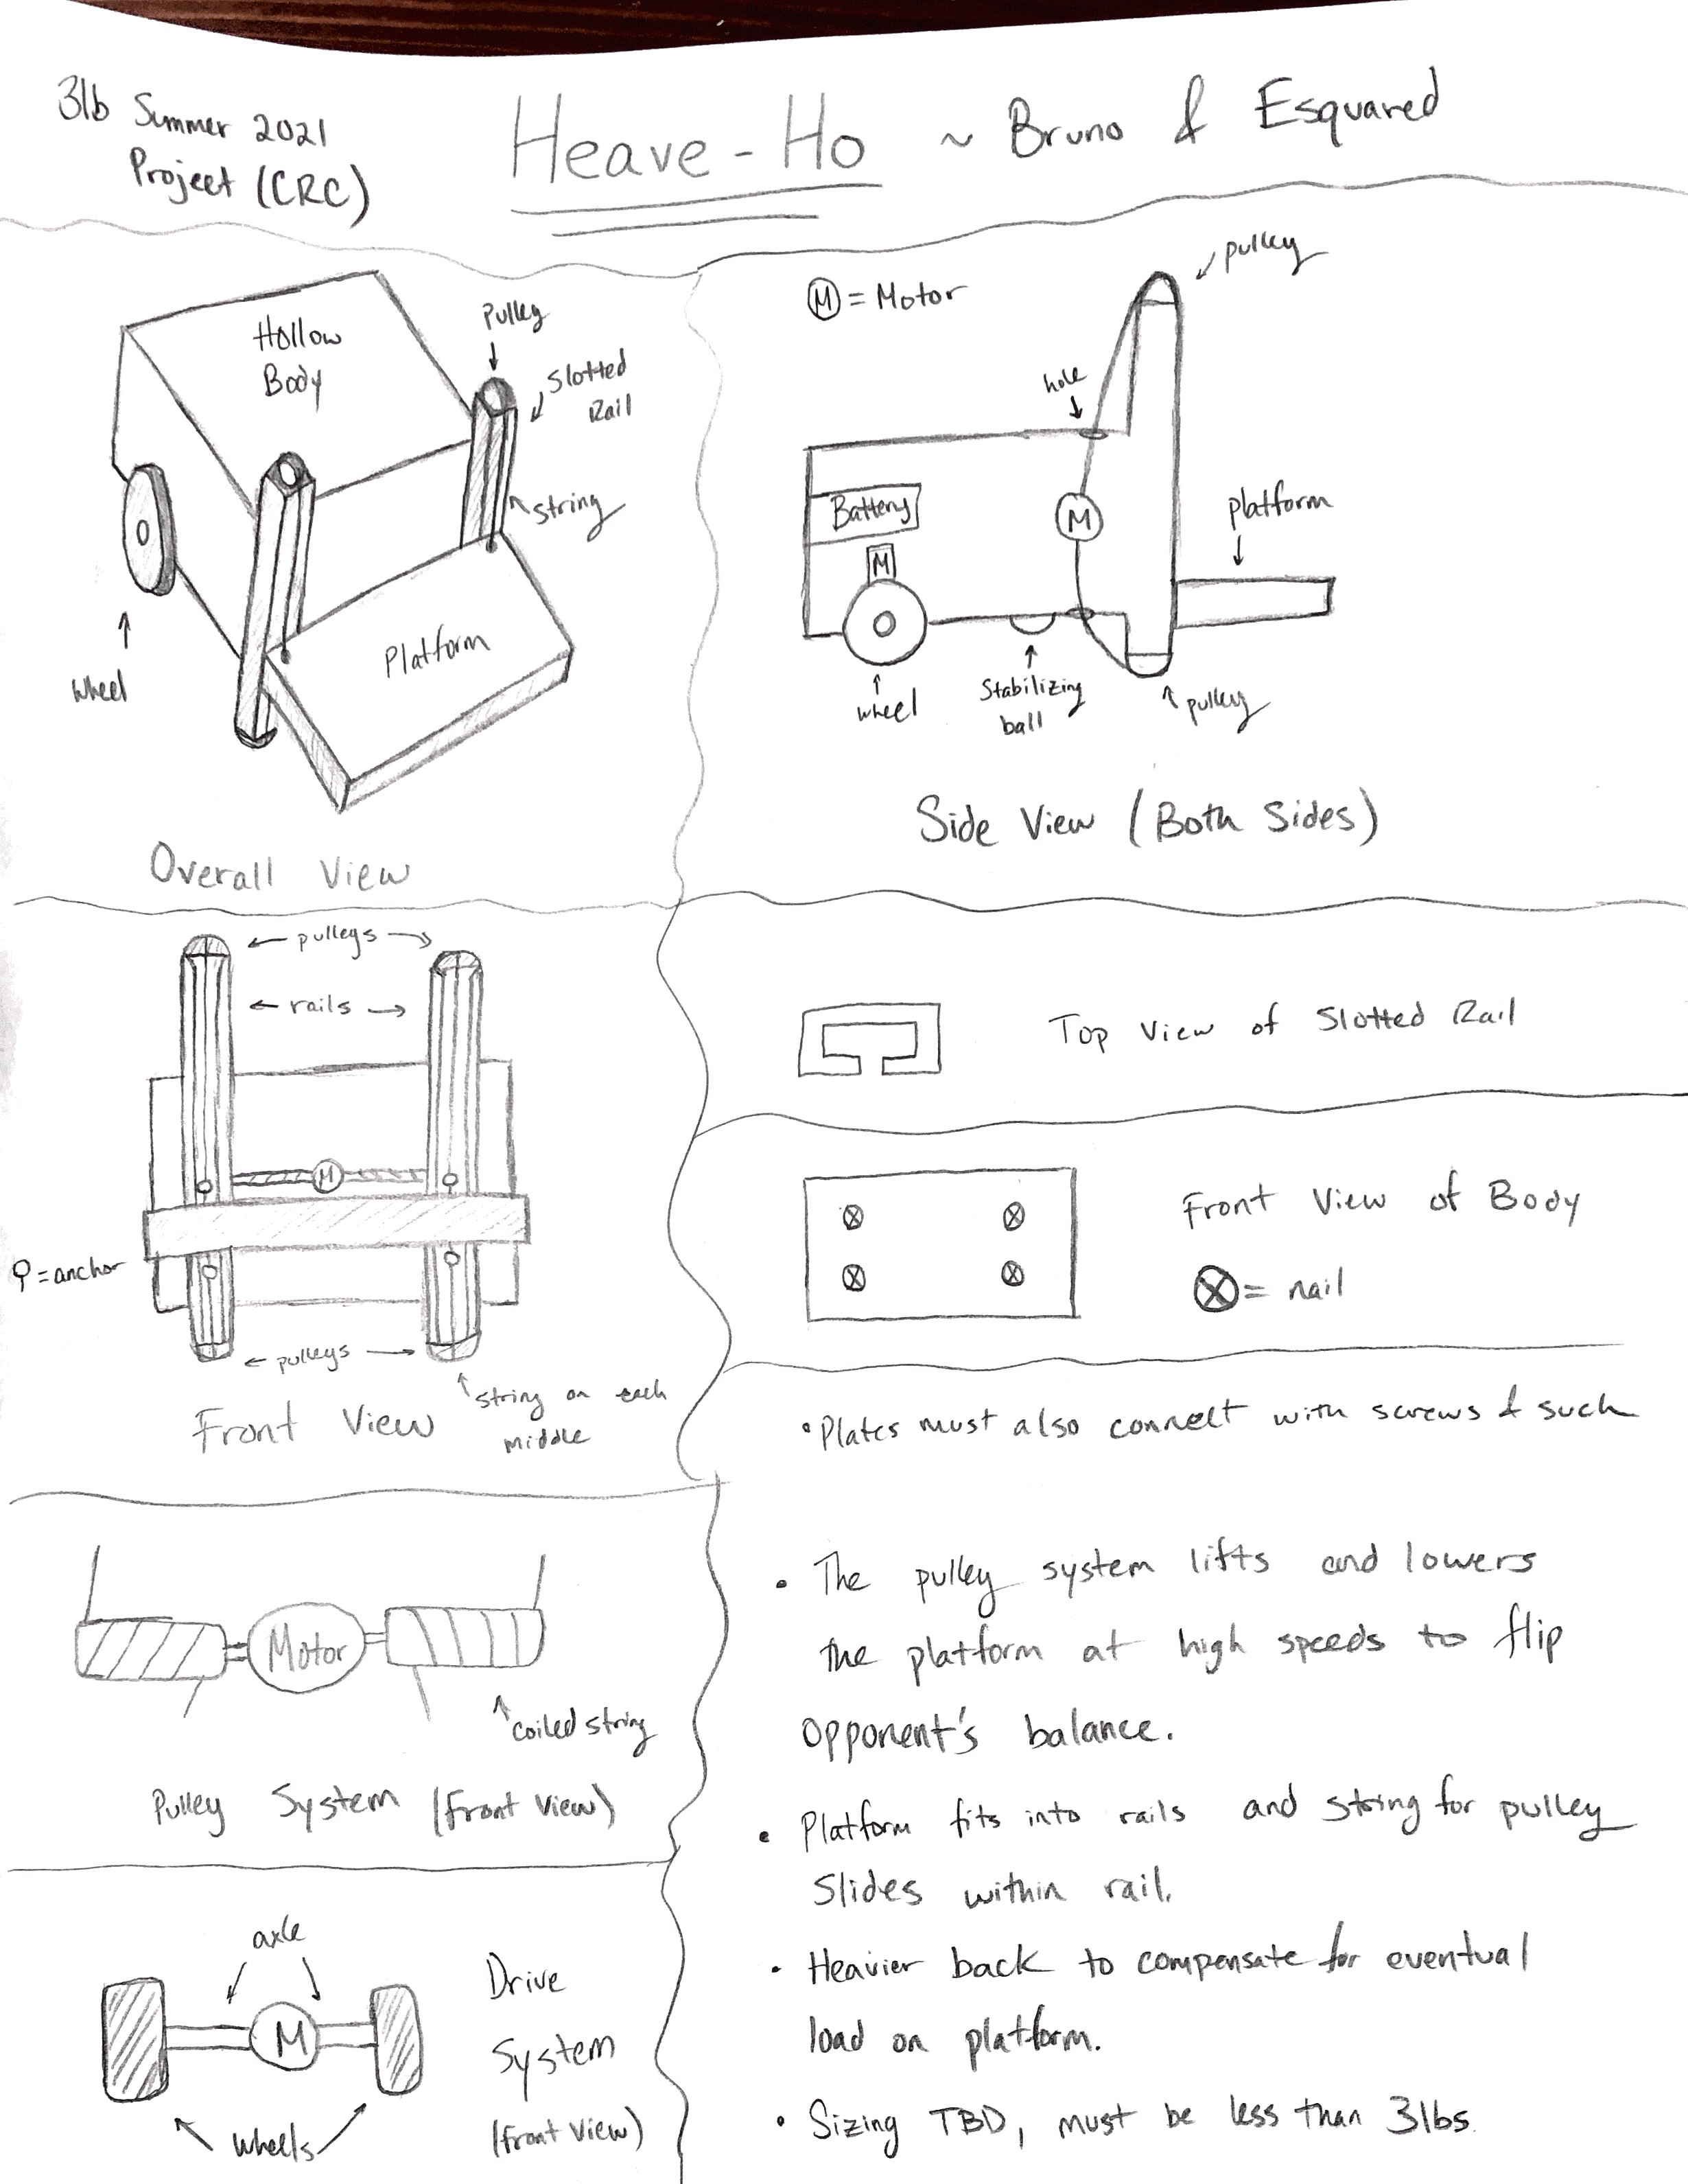 initial sketch design